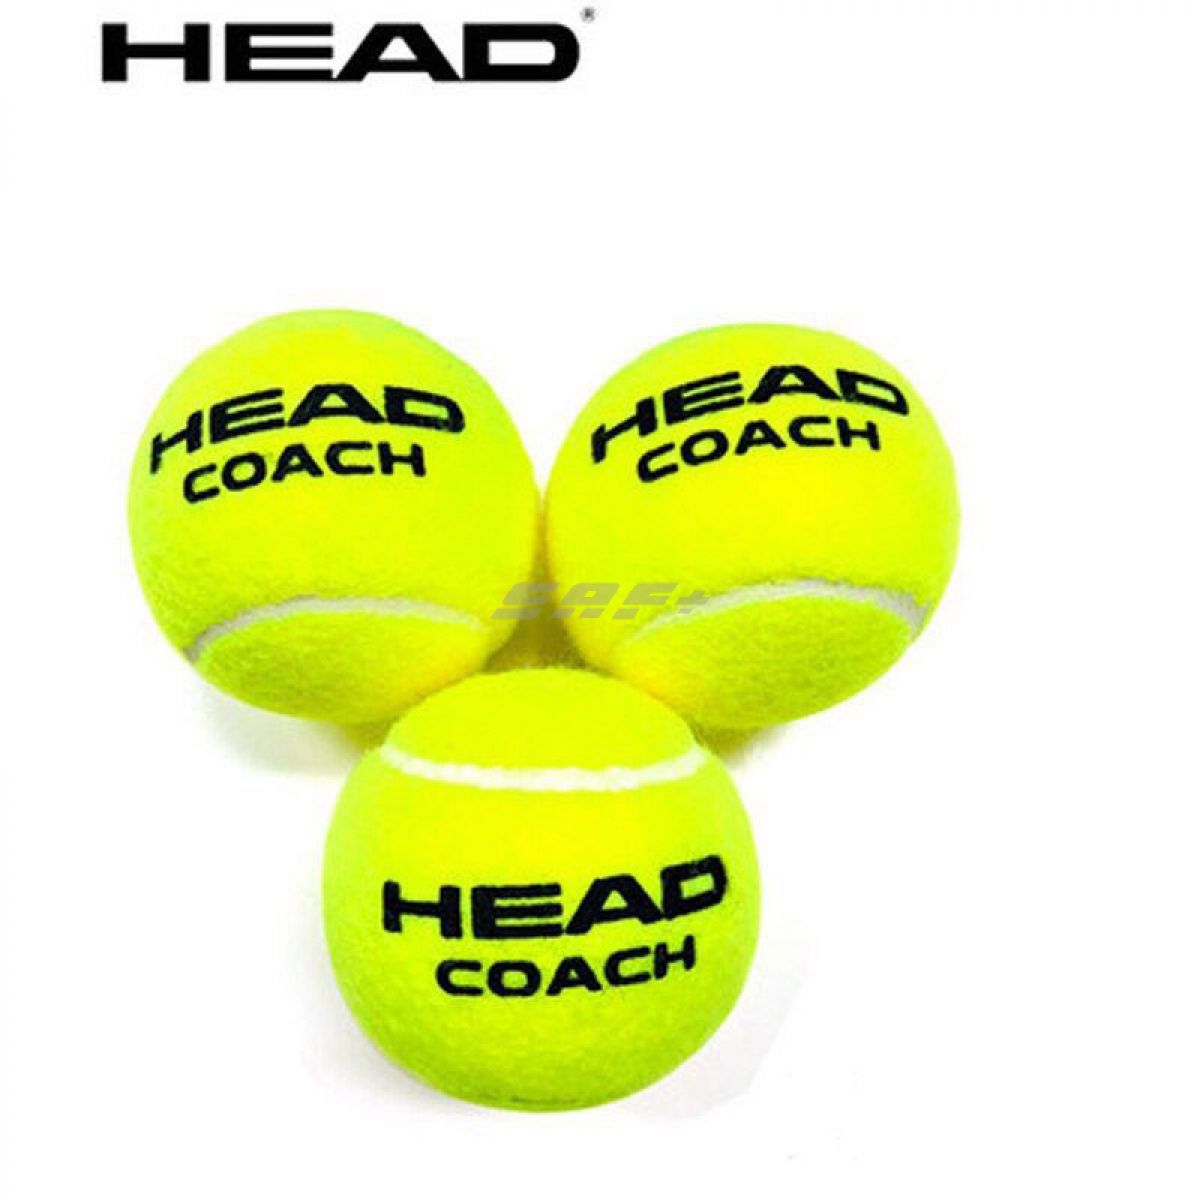 Мяч теннисный HEAD Coach,арт.578330, уп.72 шт, сукно, нат.резина, желтый